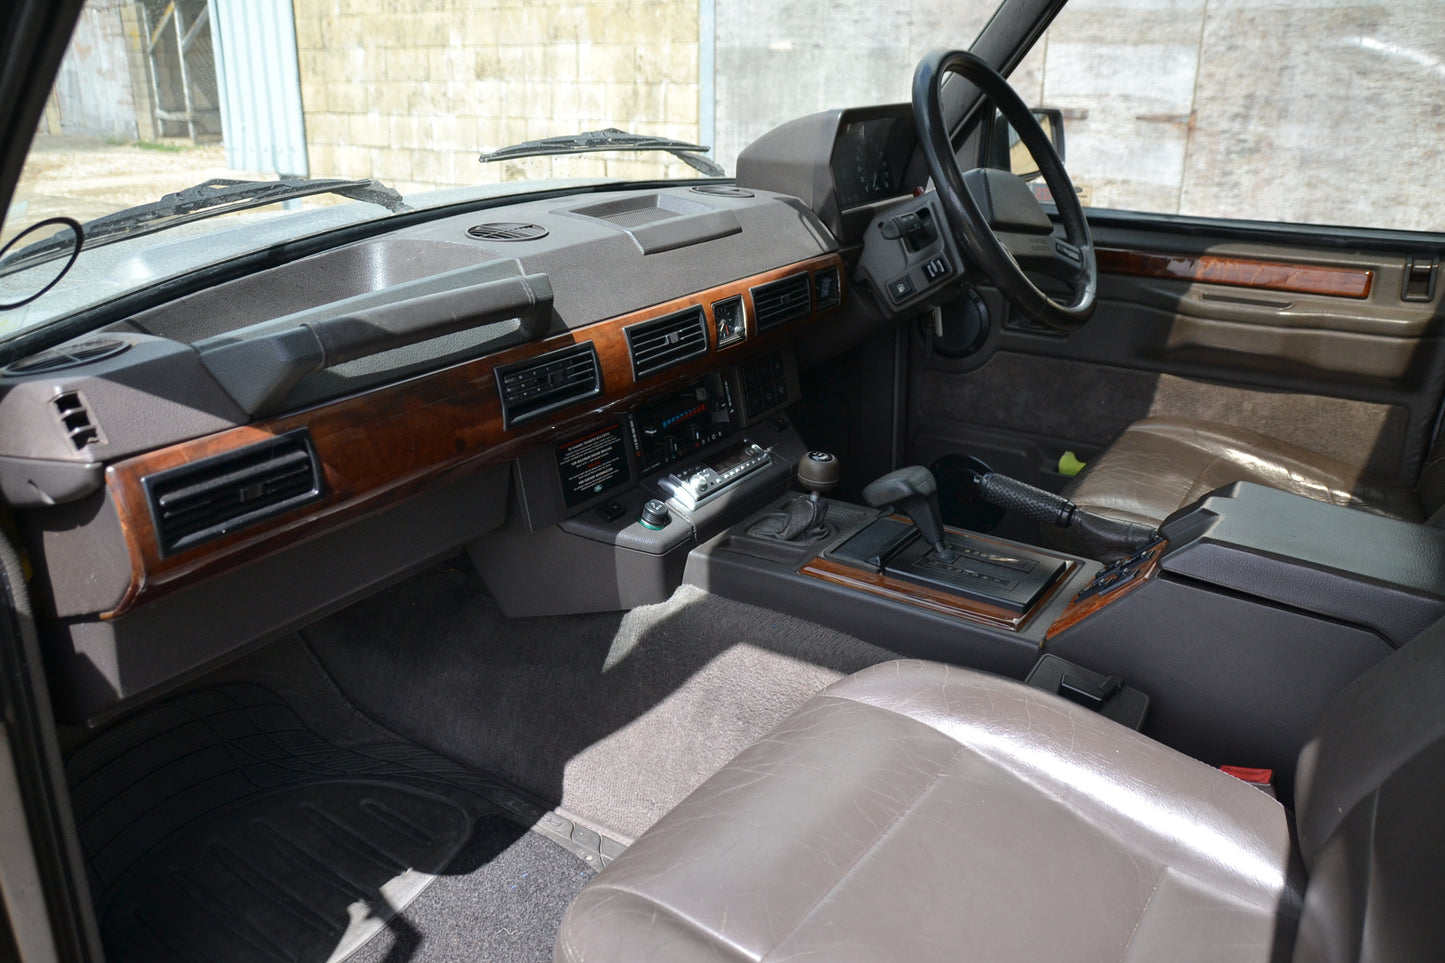 SOLD 1992 Range Rover classic Vogue 3.9 efi Auto (restoration project)